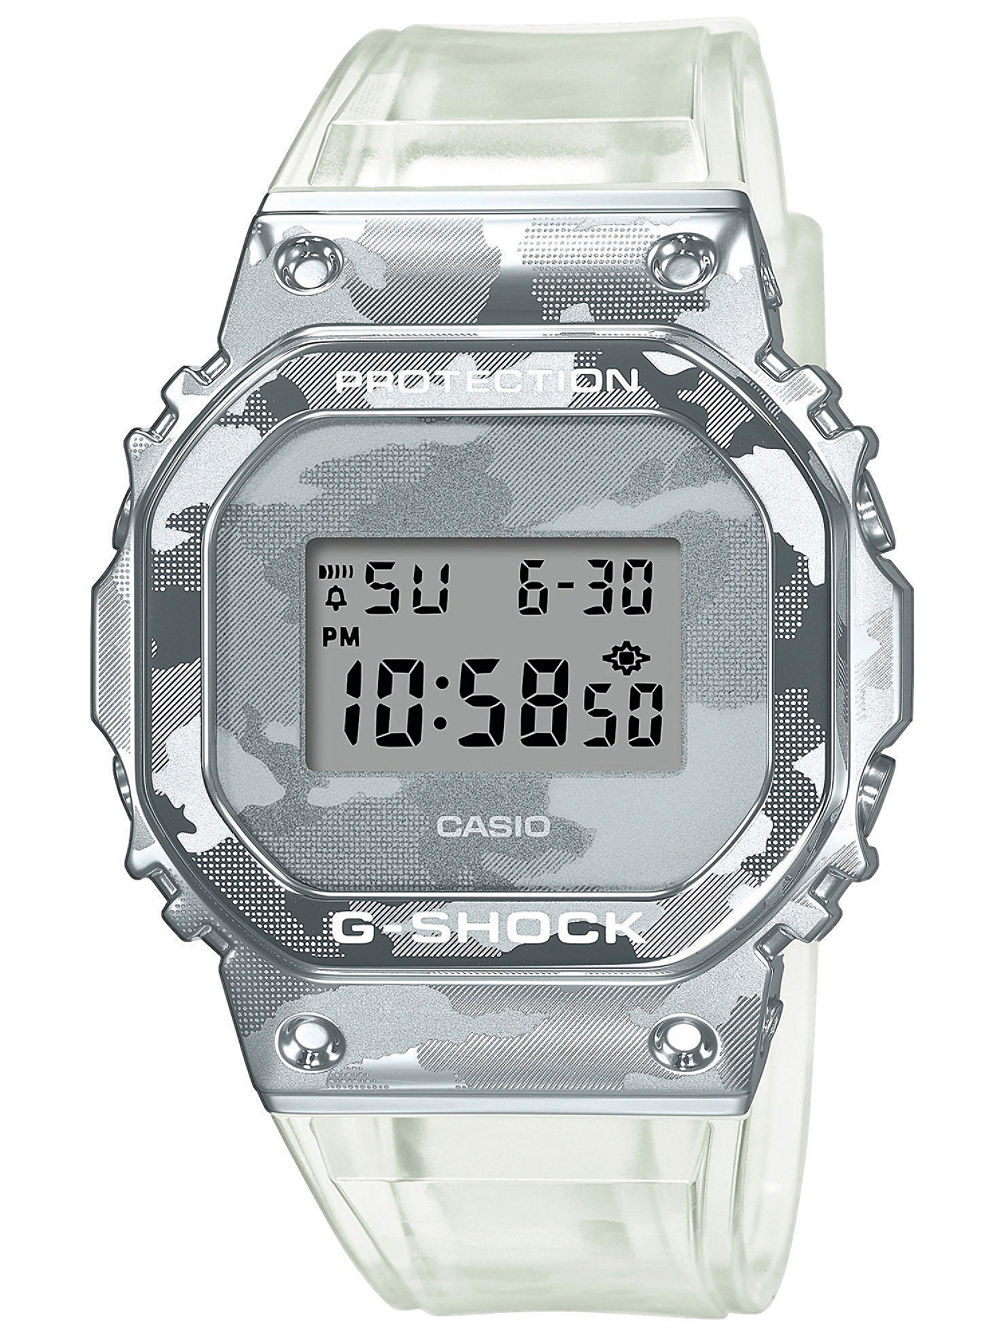 GM-5600SCM-1ER Watch